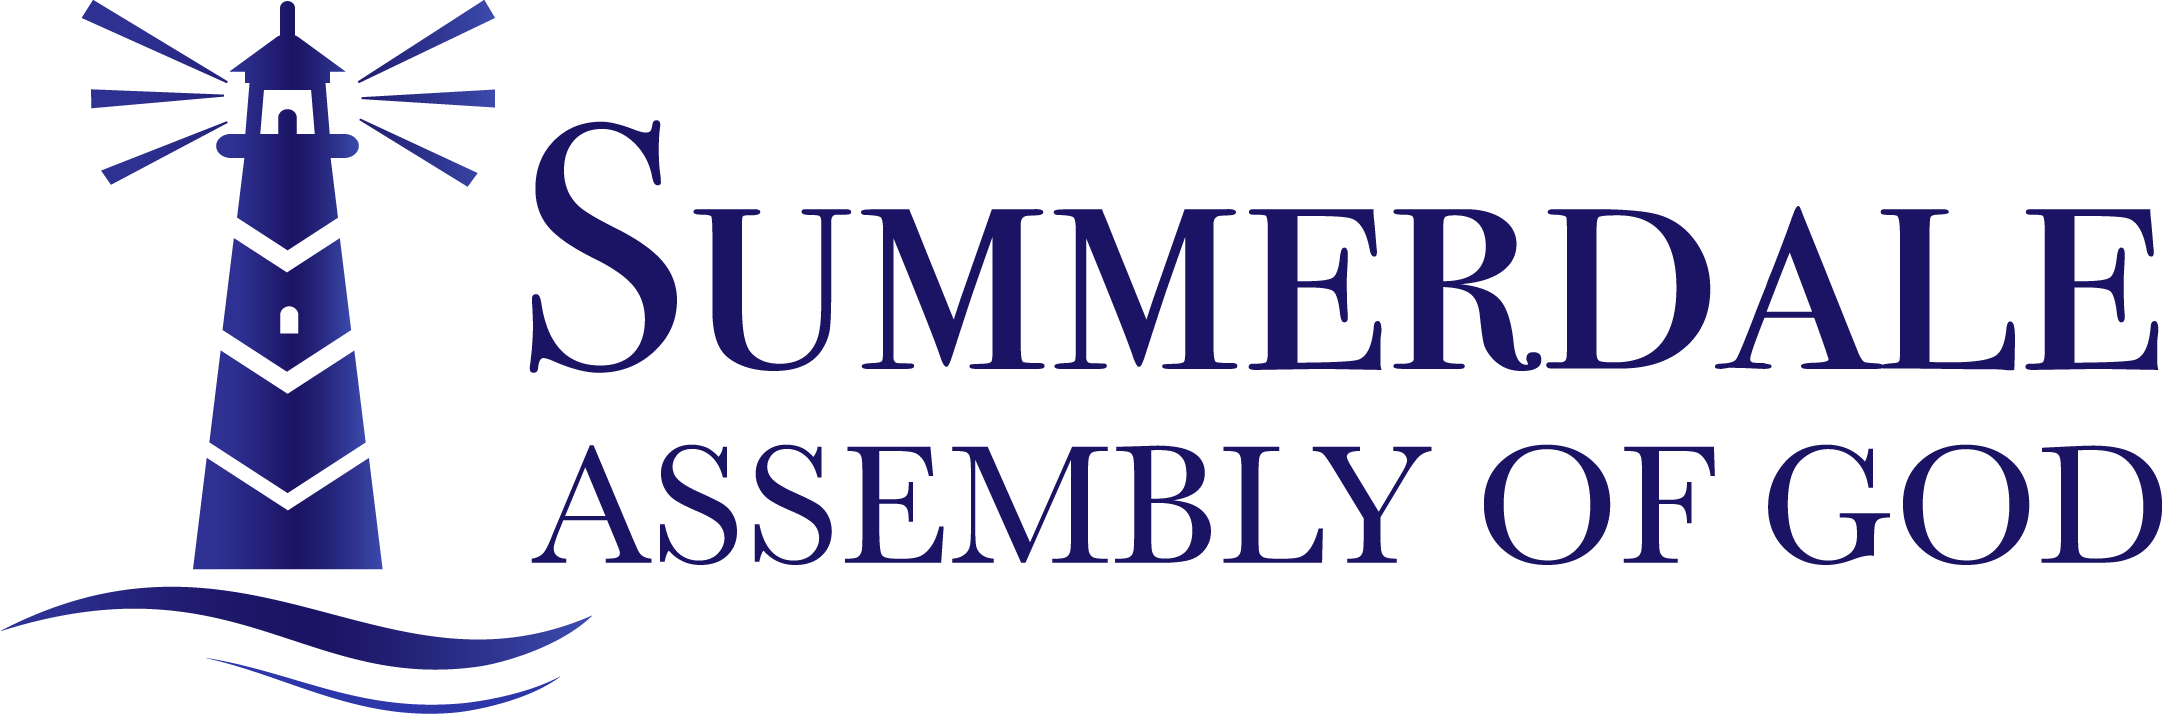 Summerdale Assembly of God